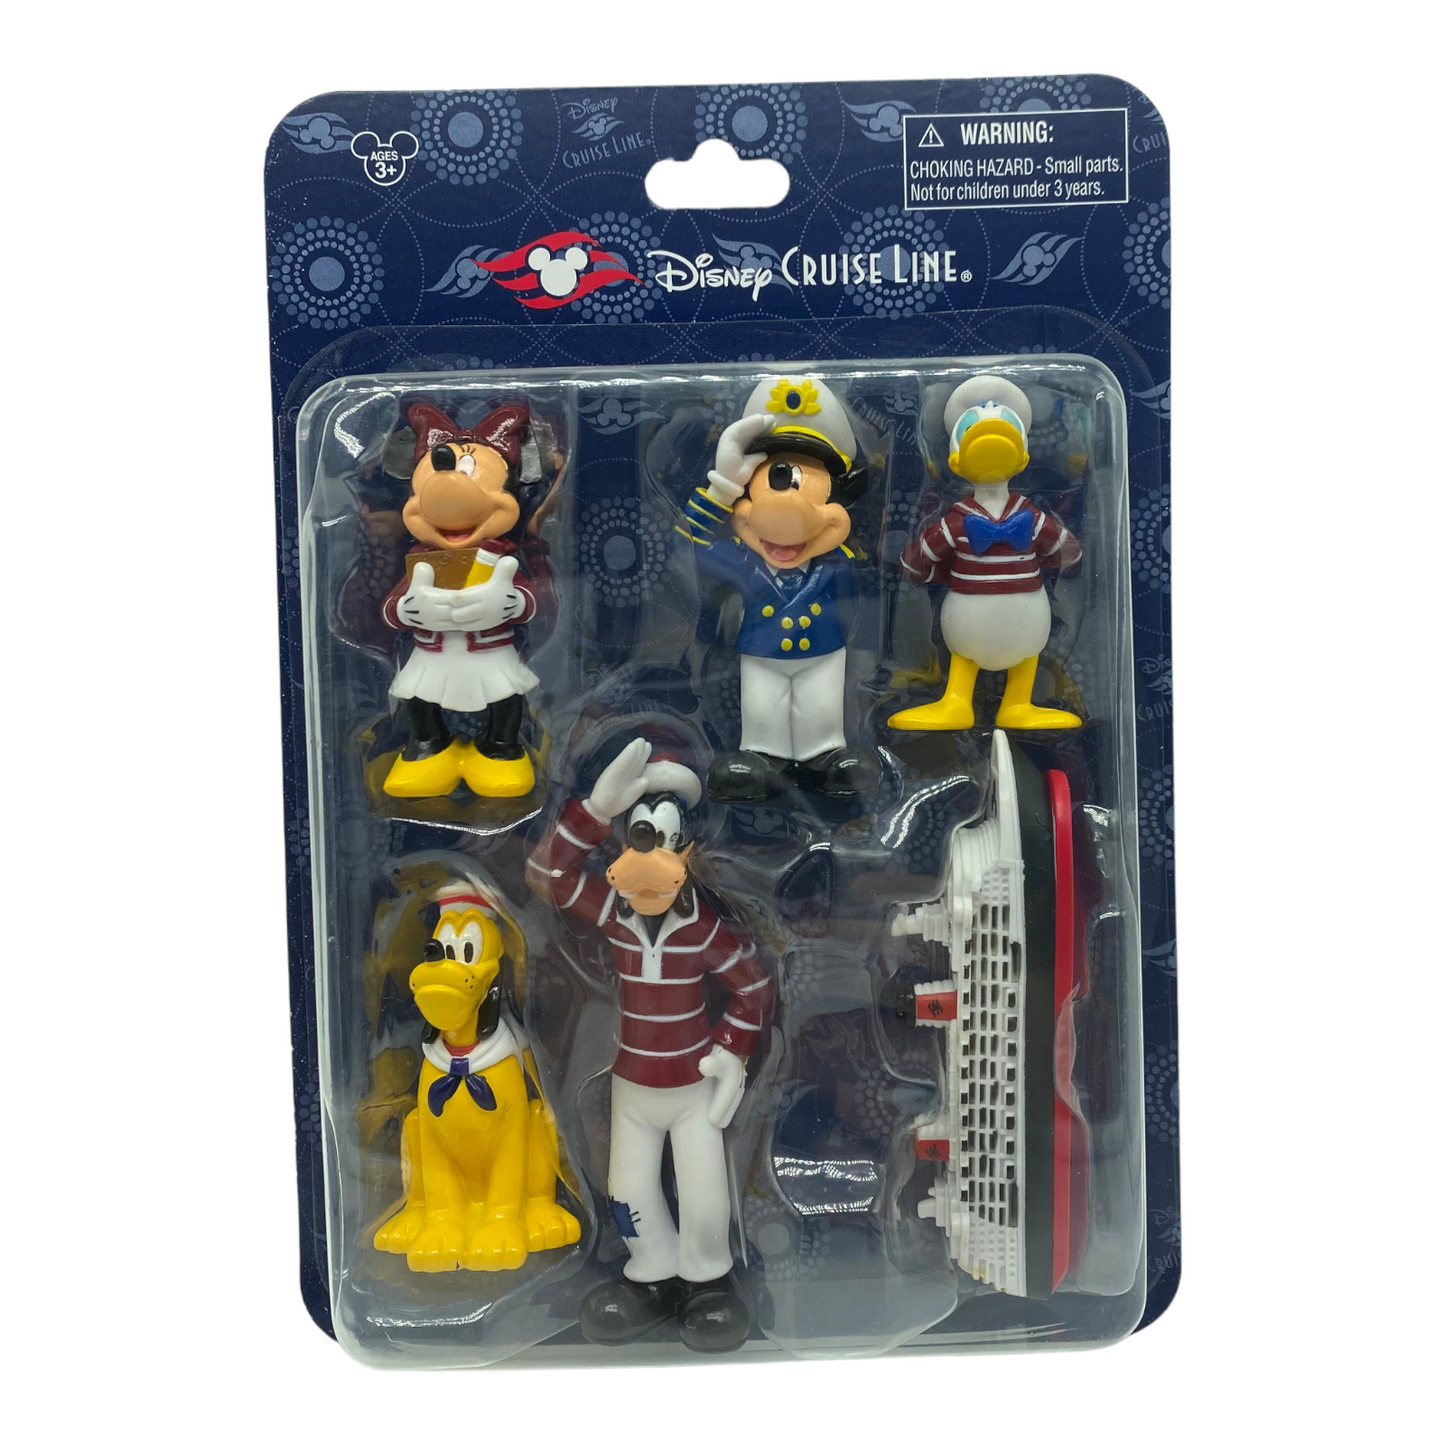 Mickey Minnie and Friends Figurine Play Set - Disney Cruise Line